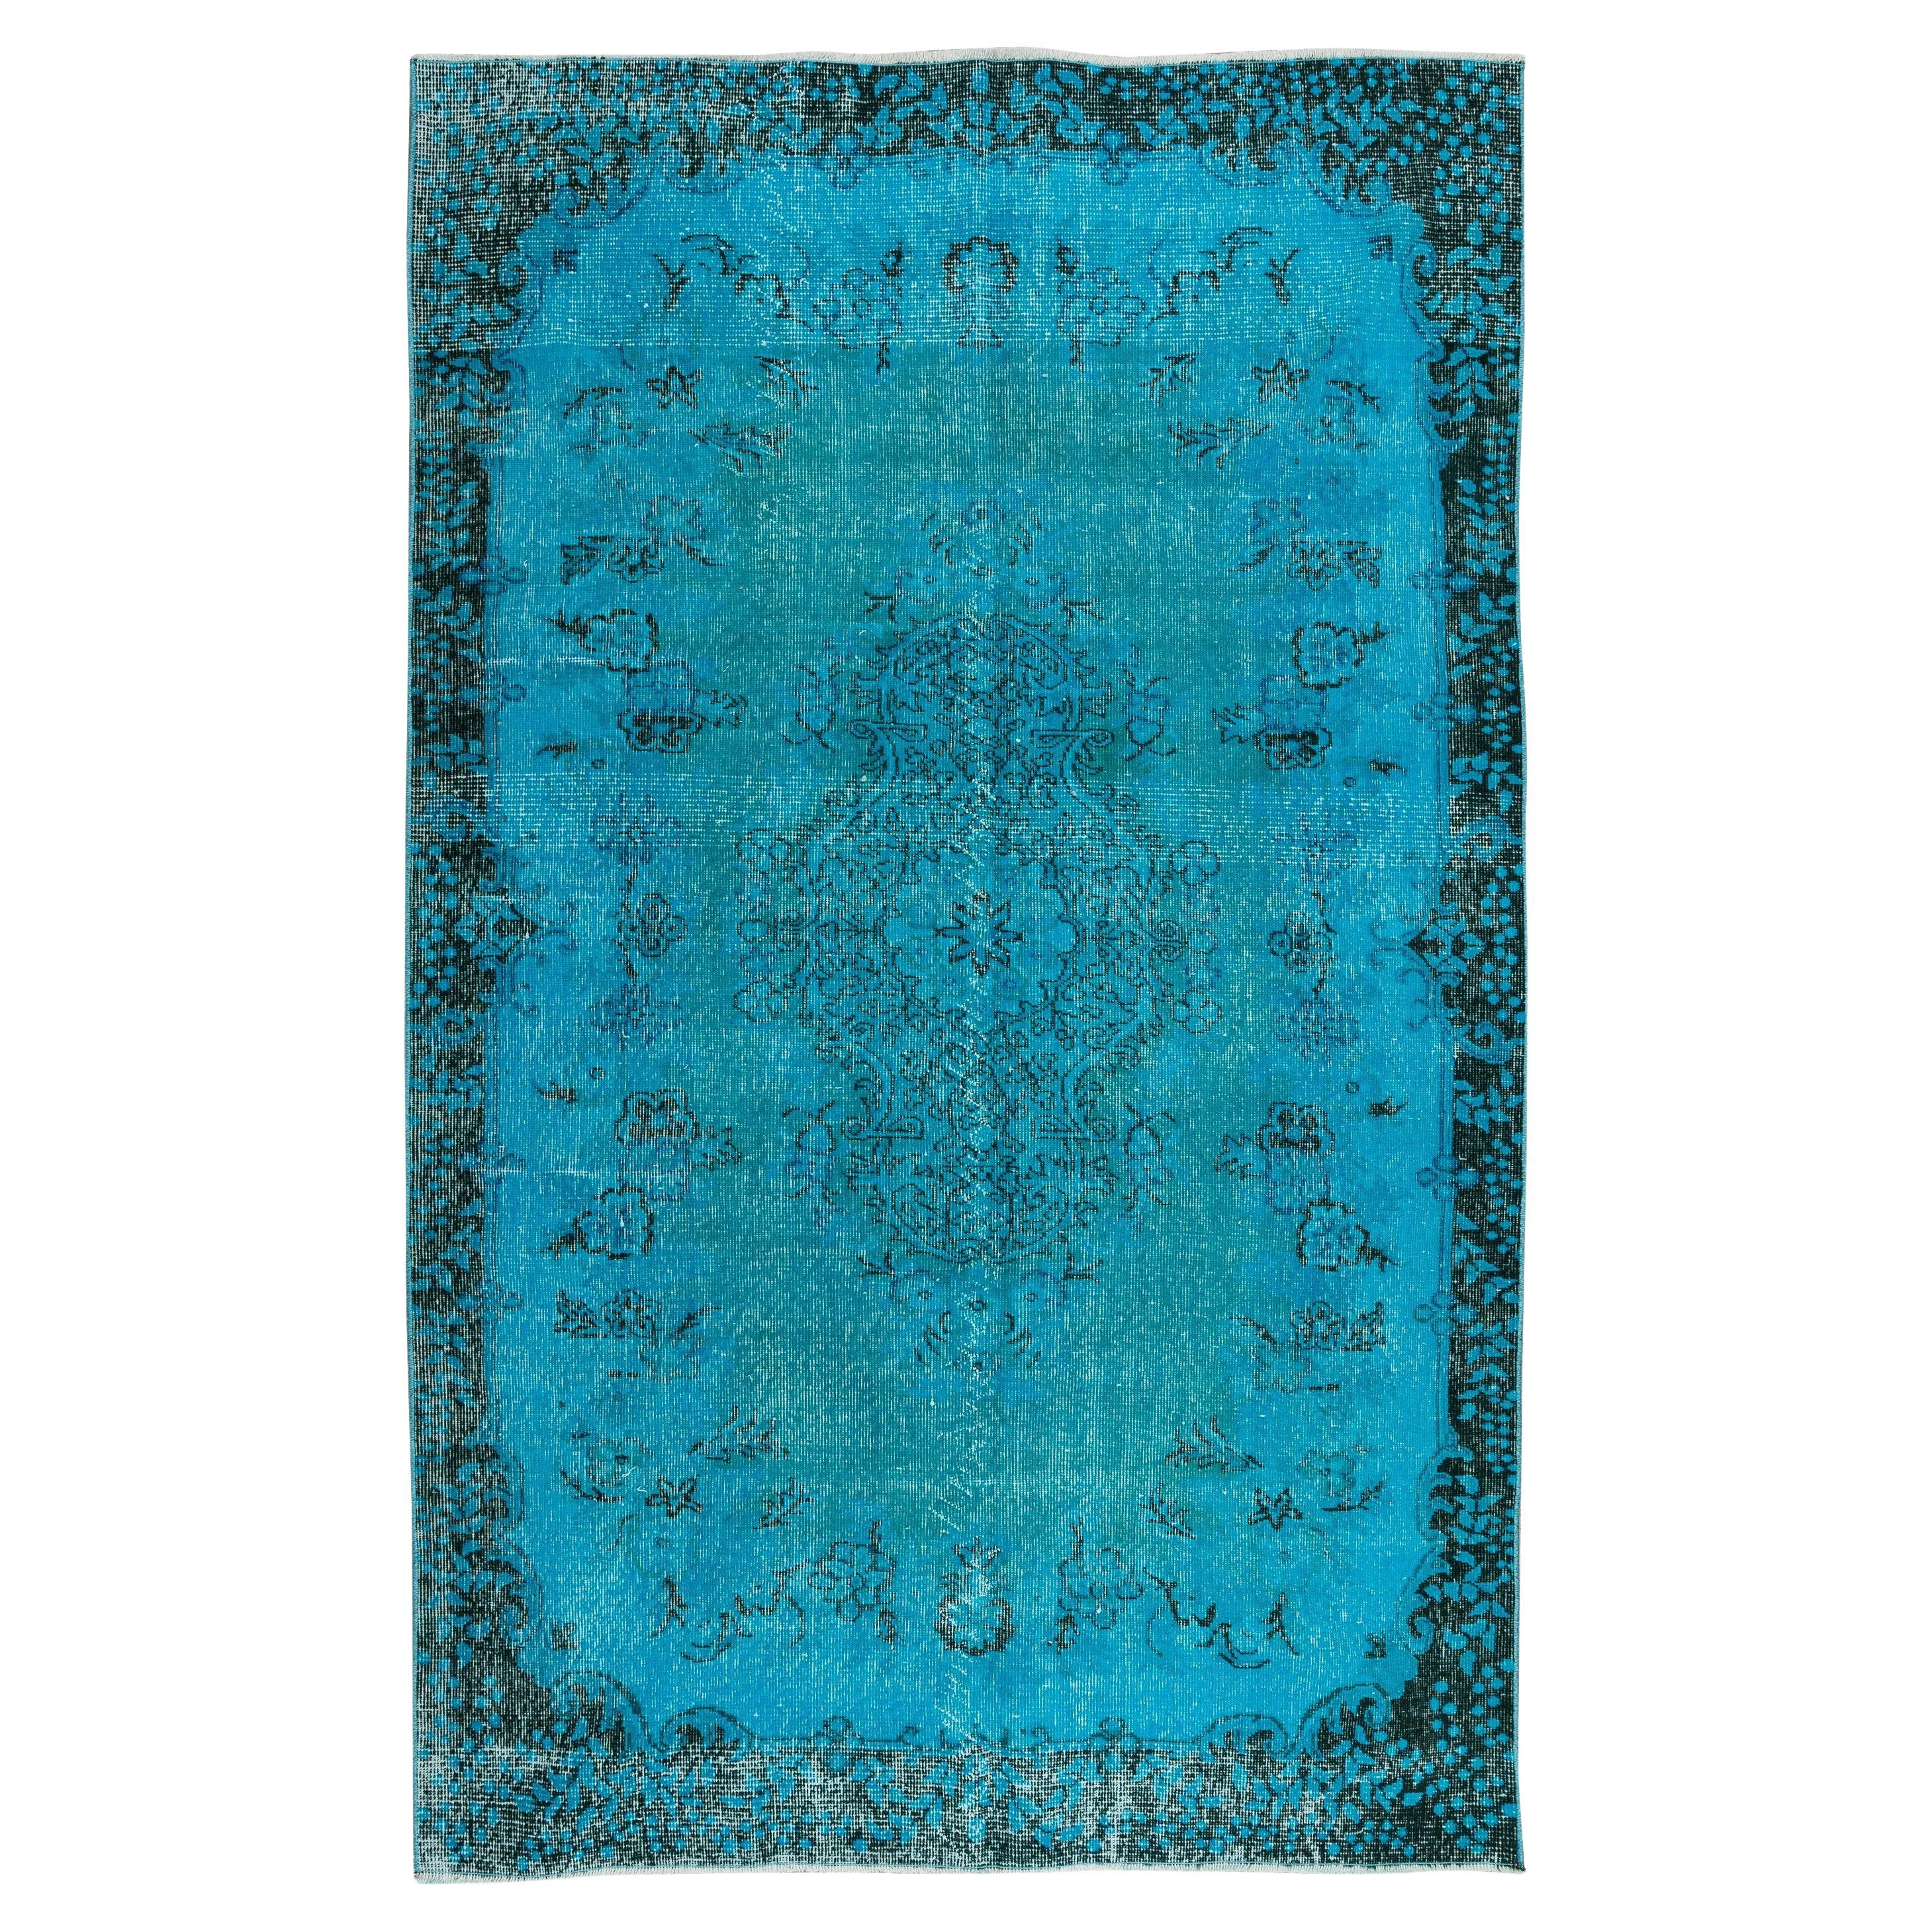 5.4x8.8 Ft Modern Handmade Area Rug. Vintage Turkish Carpet Over-Dyed in Teal